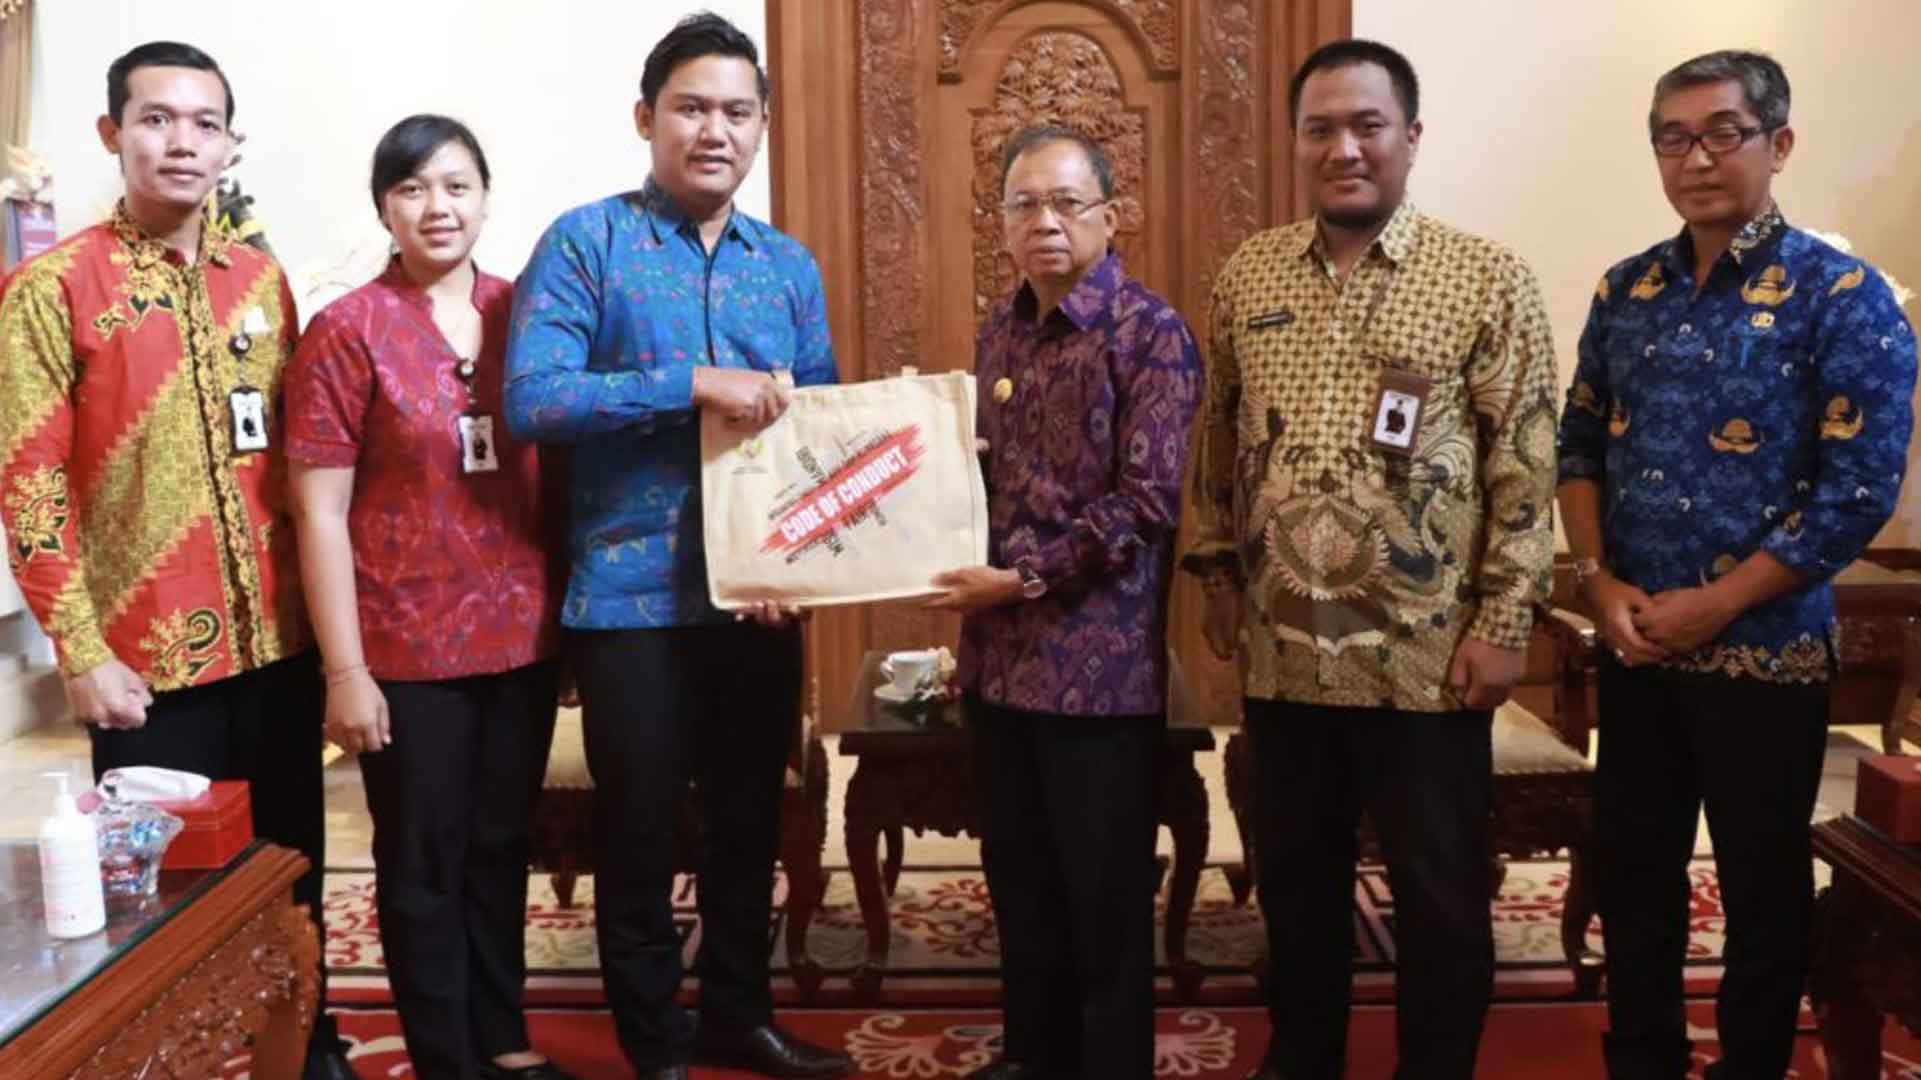 Jalin Silaturahmi, Gubernur Bali Sambut Baik Kehadiran Penghubung KY di Pulau Dewata